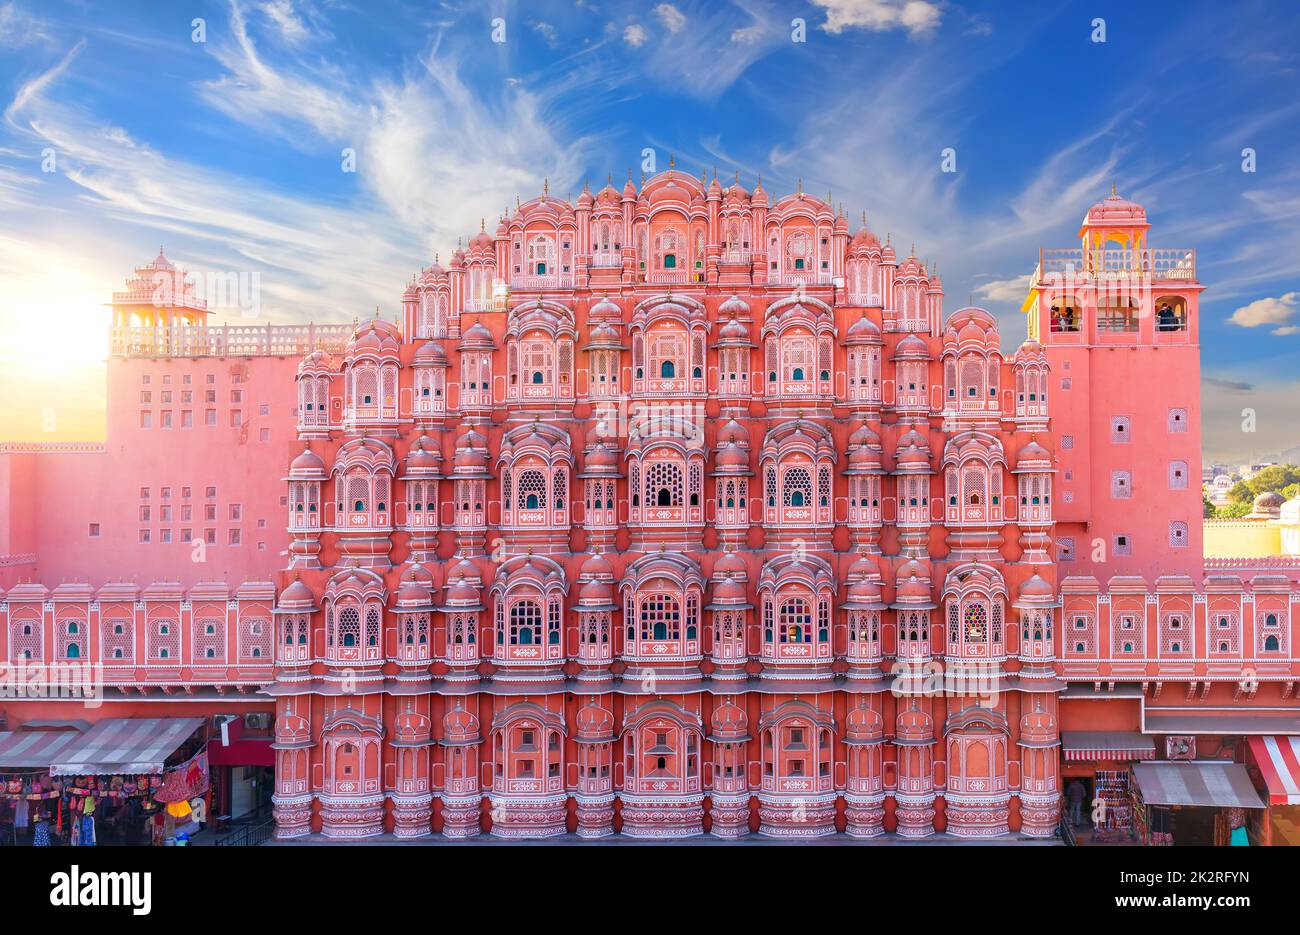 Pink palace Hawa Mahal, Jaipur, India, beautiful sunset view Stock Photo